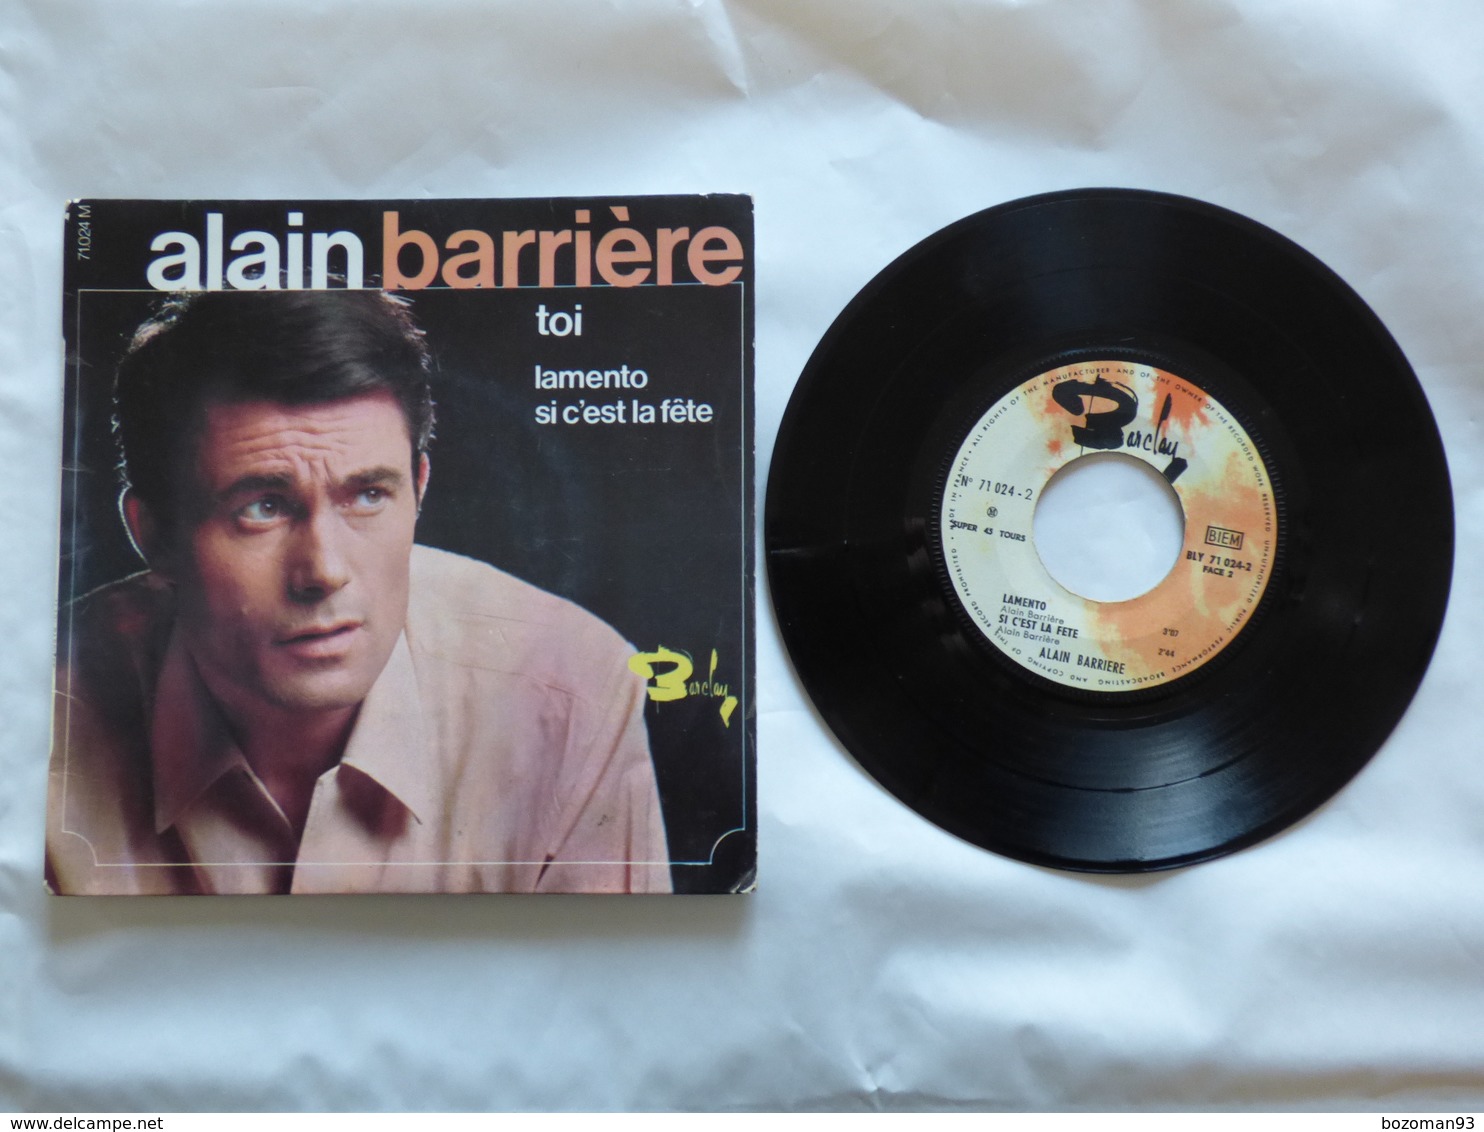 EP 45 T ALAIN BARRIERE  BARCLAY 71.024 - Disco, Pop